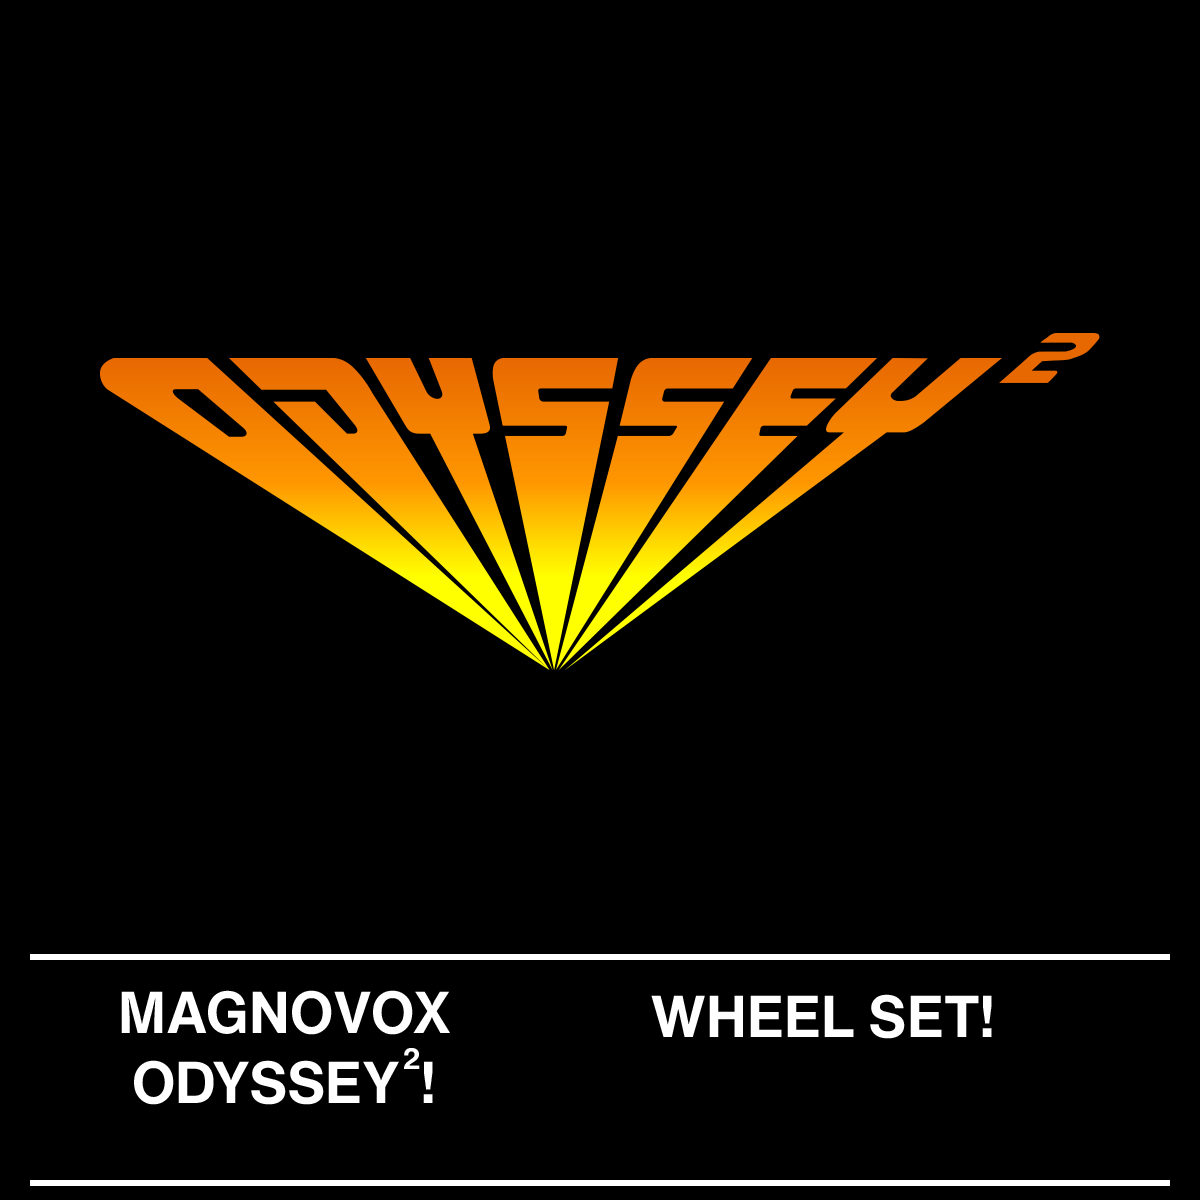 magnavox odyssey 2